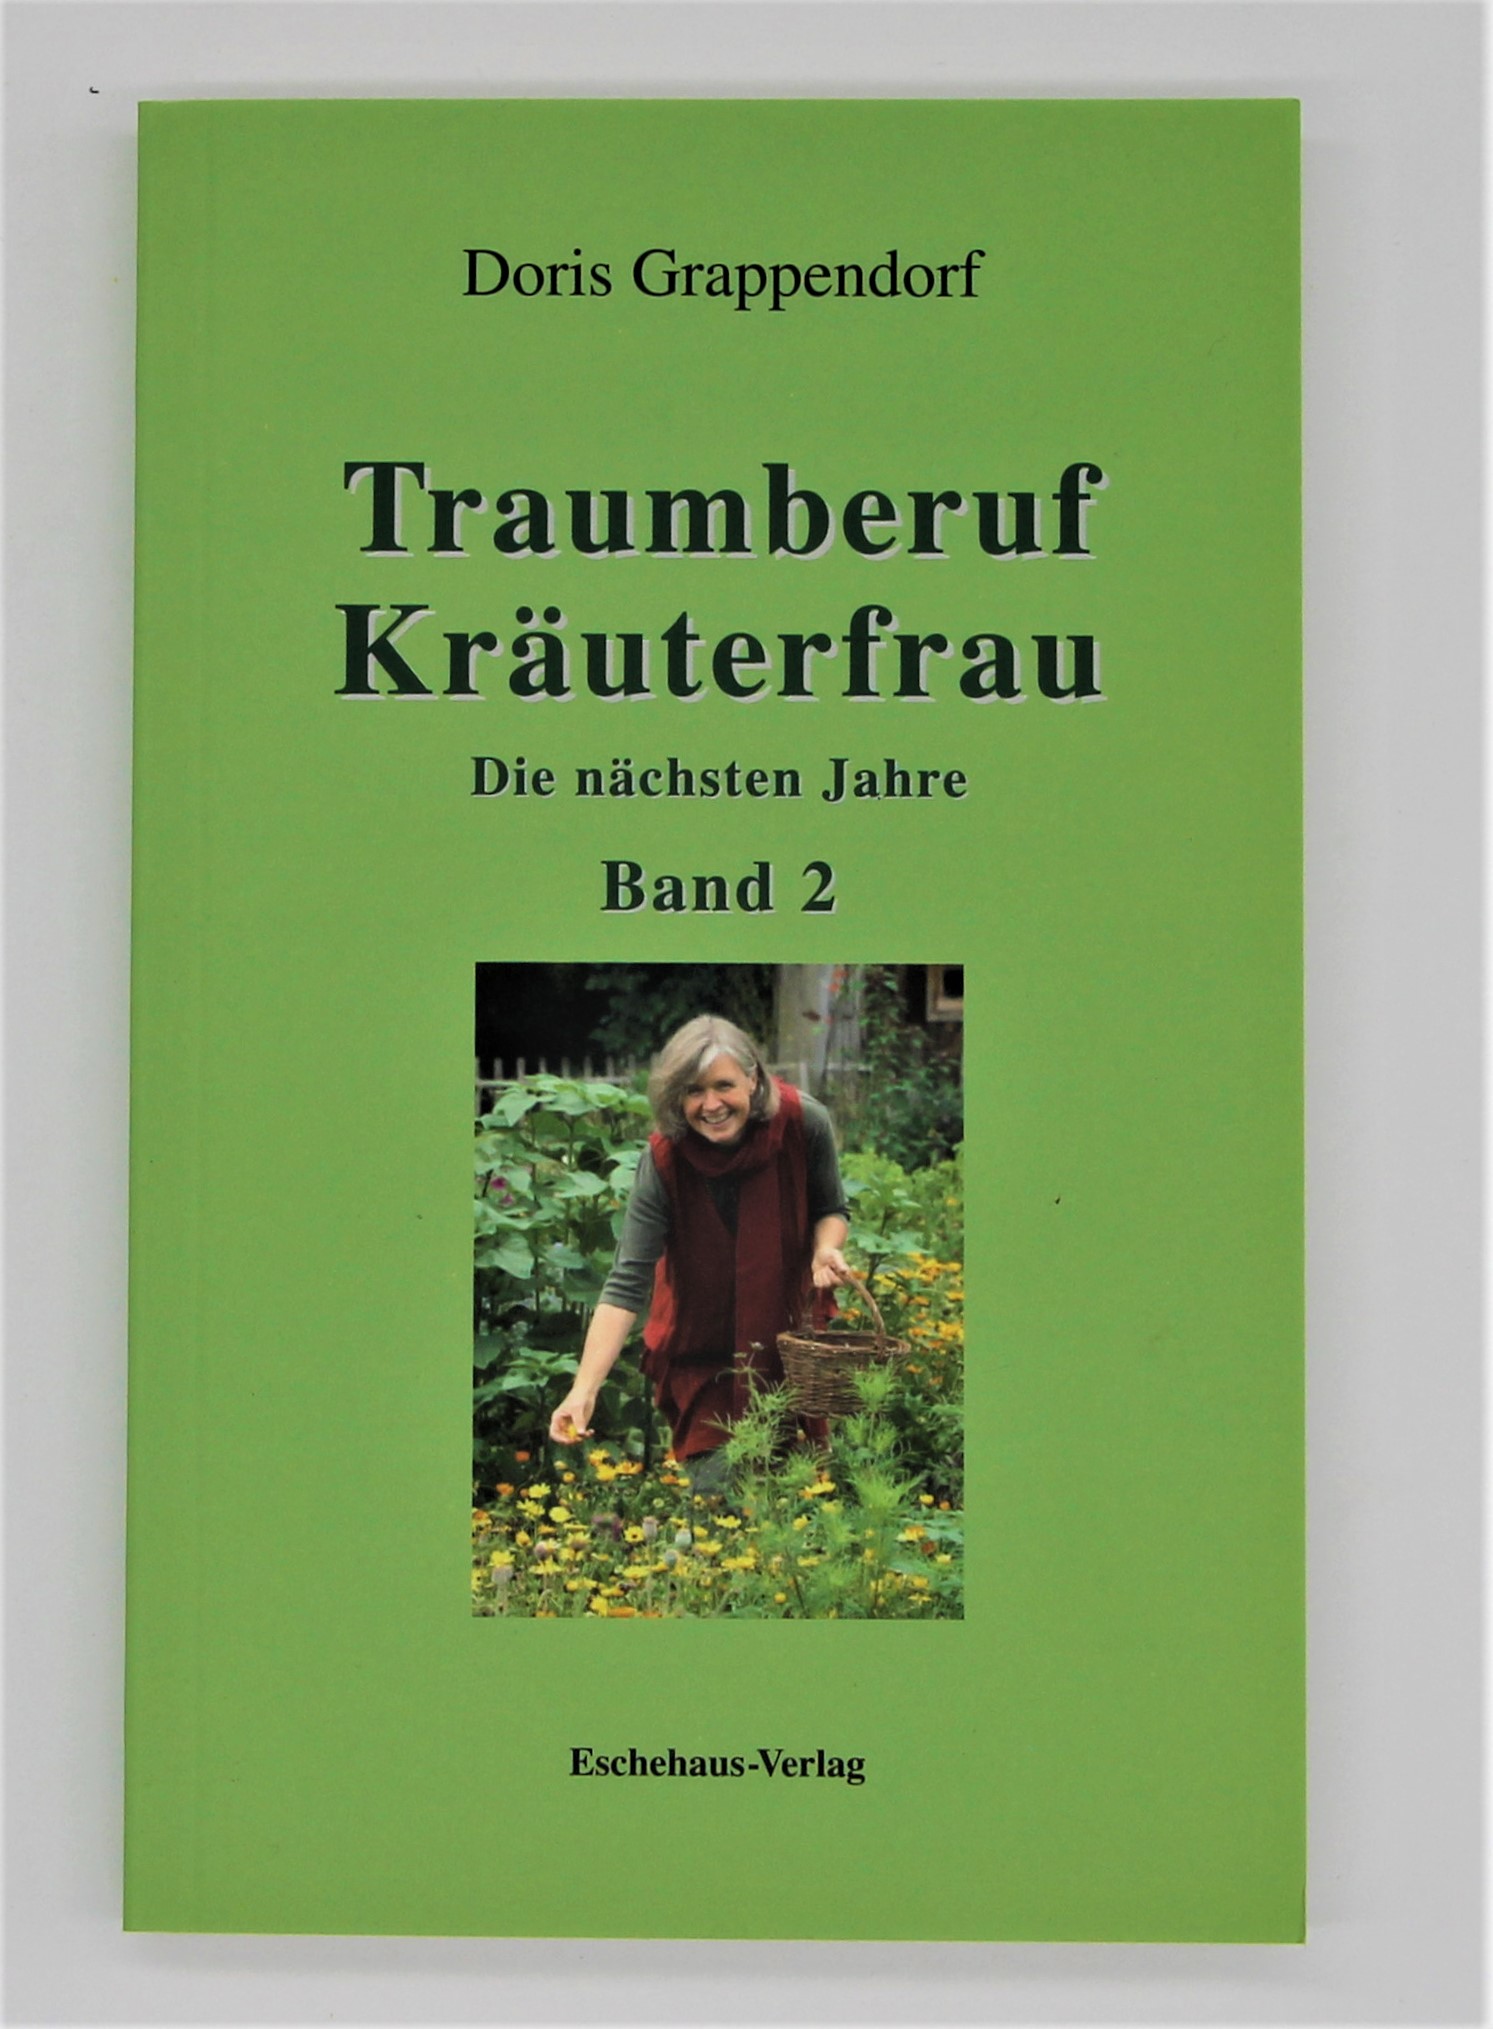 Traumberuf Kräuterfrau Band 2, Doris Grappendorf